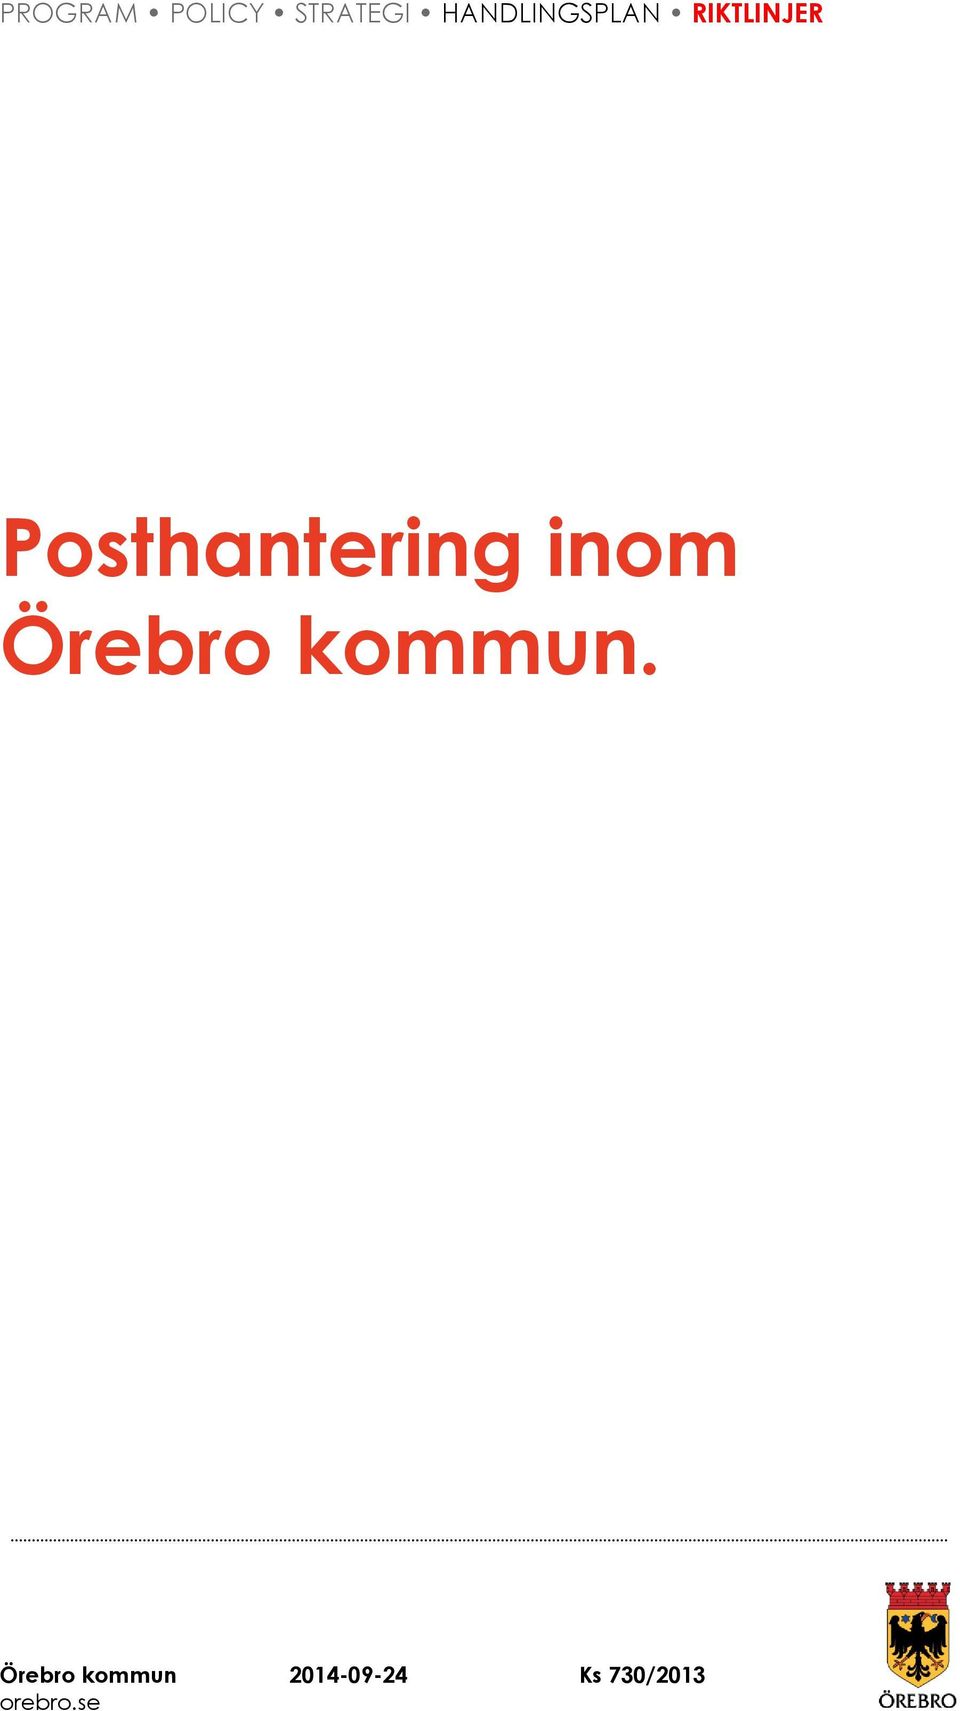 Posthantering inom Örebro kommun.